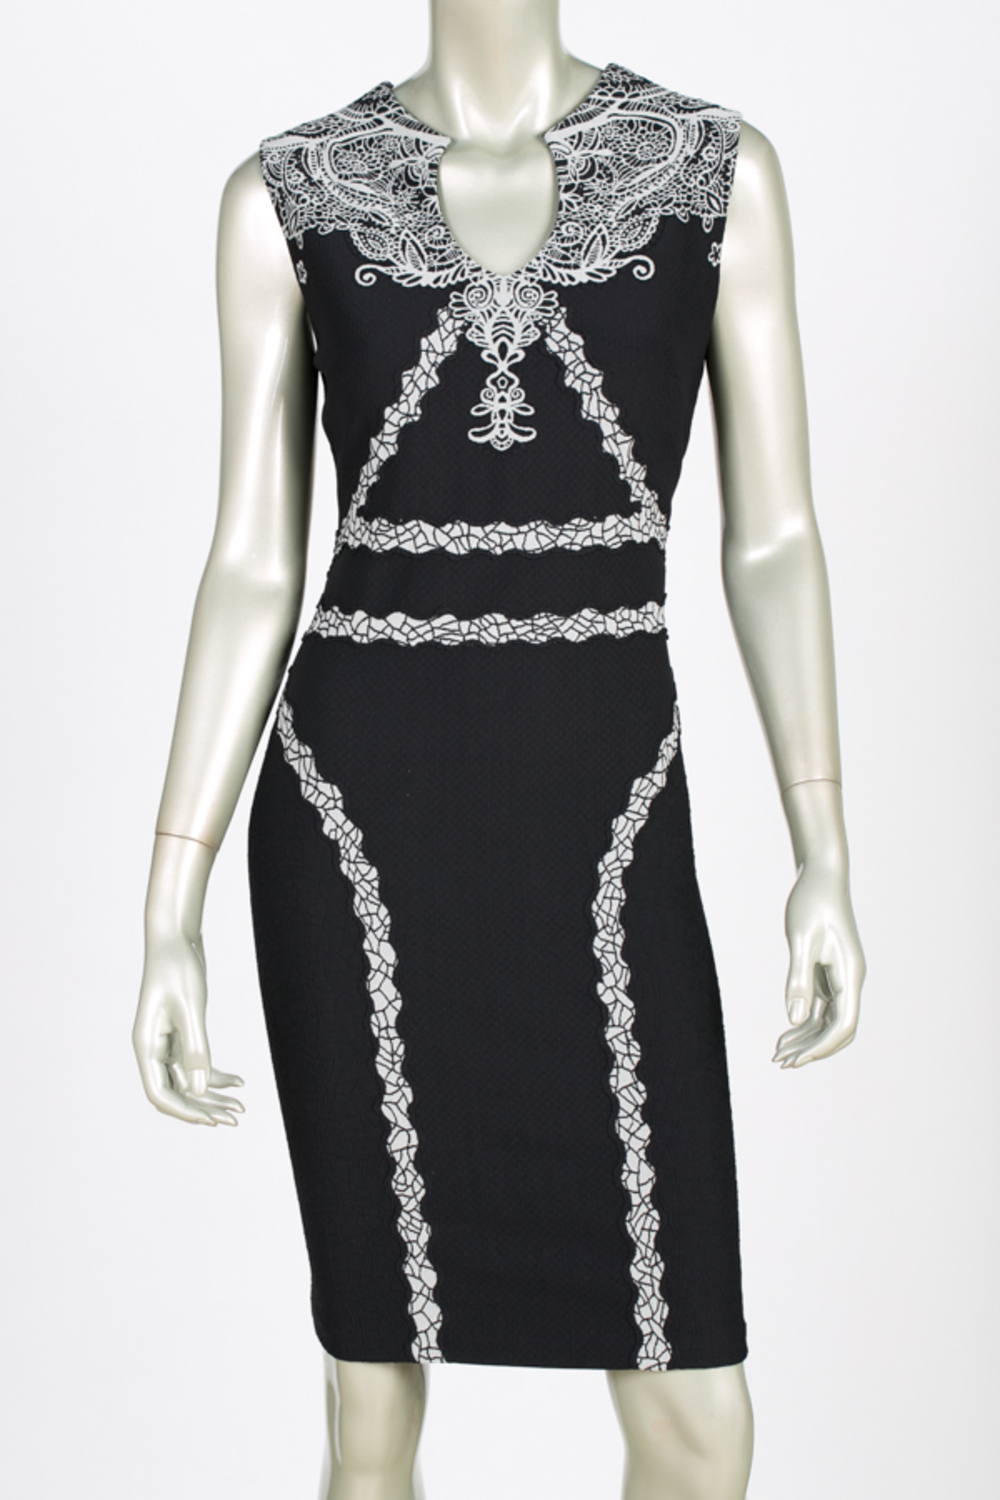 Joseph Ribkoff dress style 144896. Black/ivory